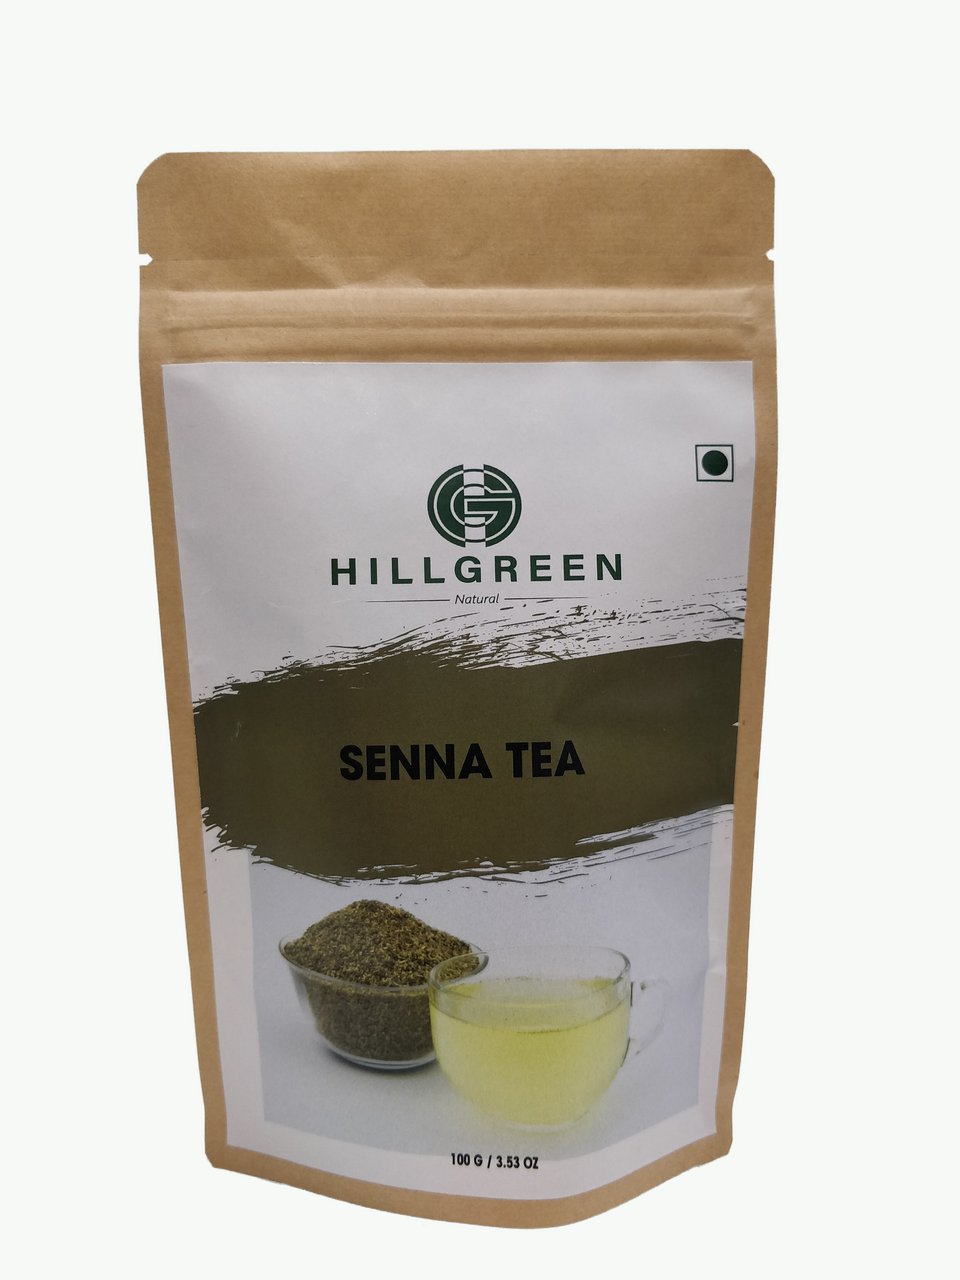 Product: Hillgreen Natural, Senna Tea, 100g